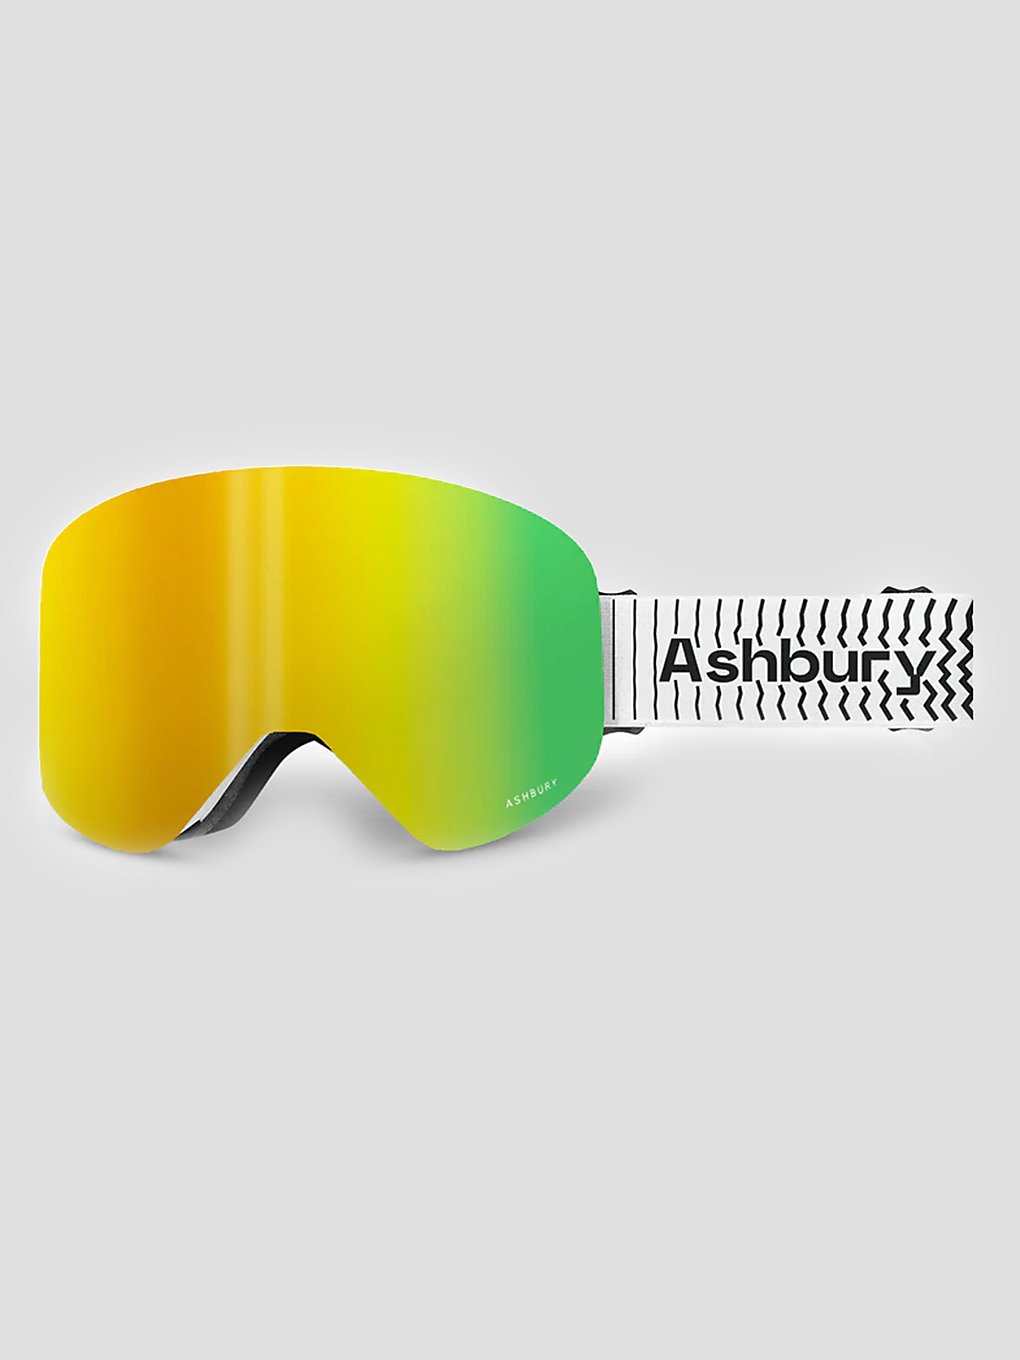 Ashbury Hornet Welton (+Bonus Lens) Goggle gold mirror+yellow kaufen